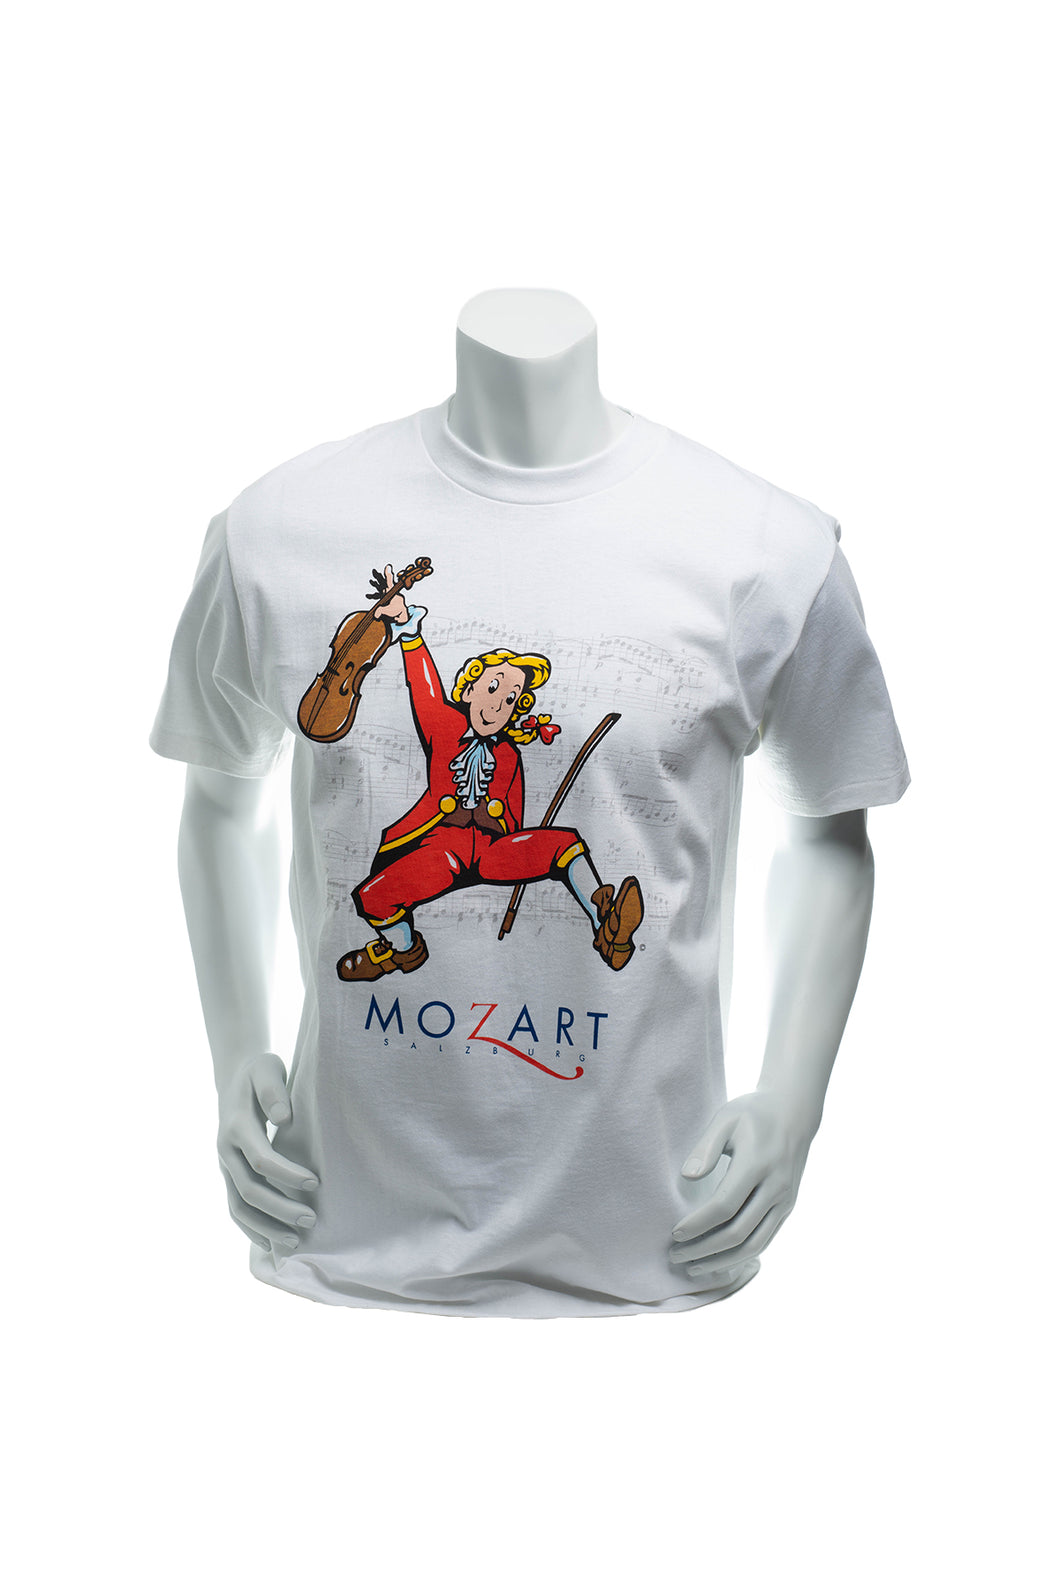 Like New Vintage 90's Mozart Salzburg, Austria Double Sided Graphic Single Stitch T-Shirt Men's Large